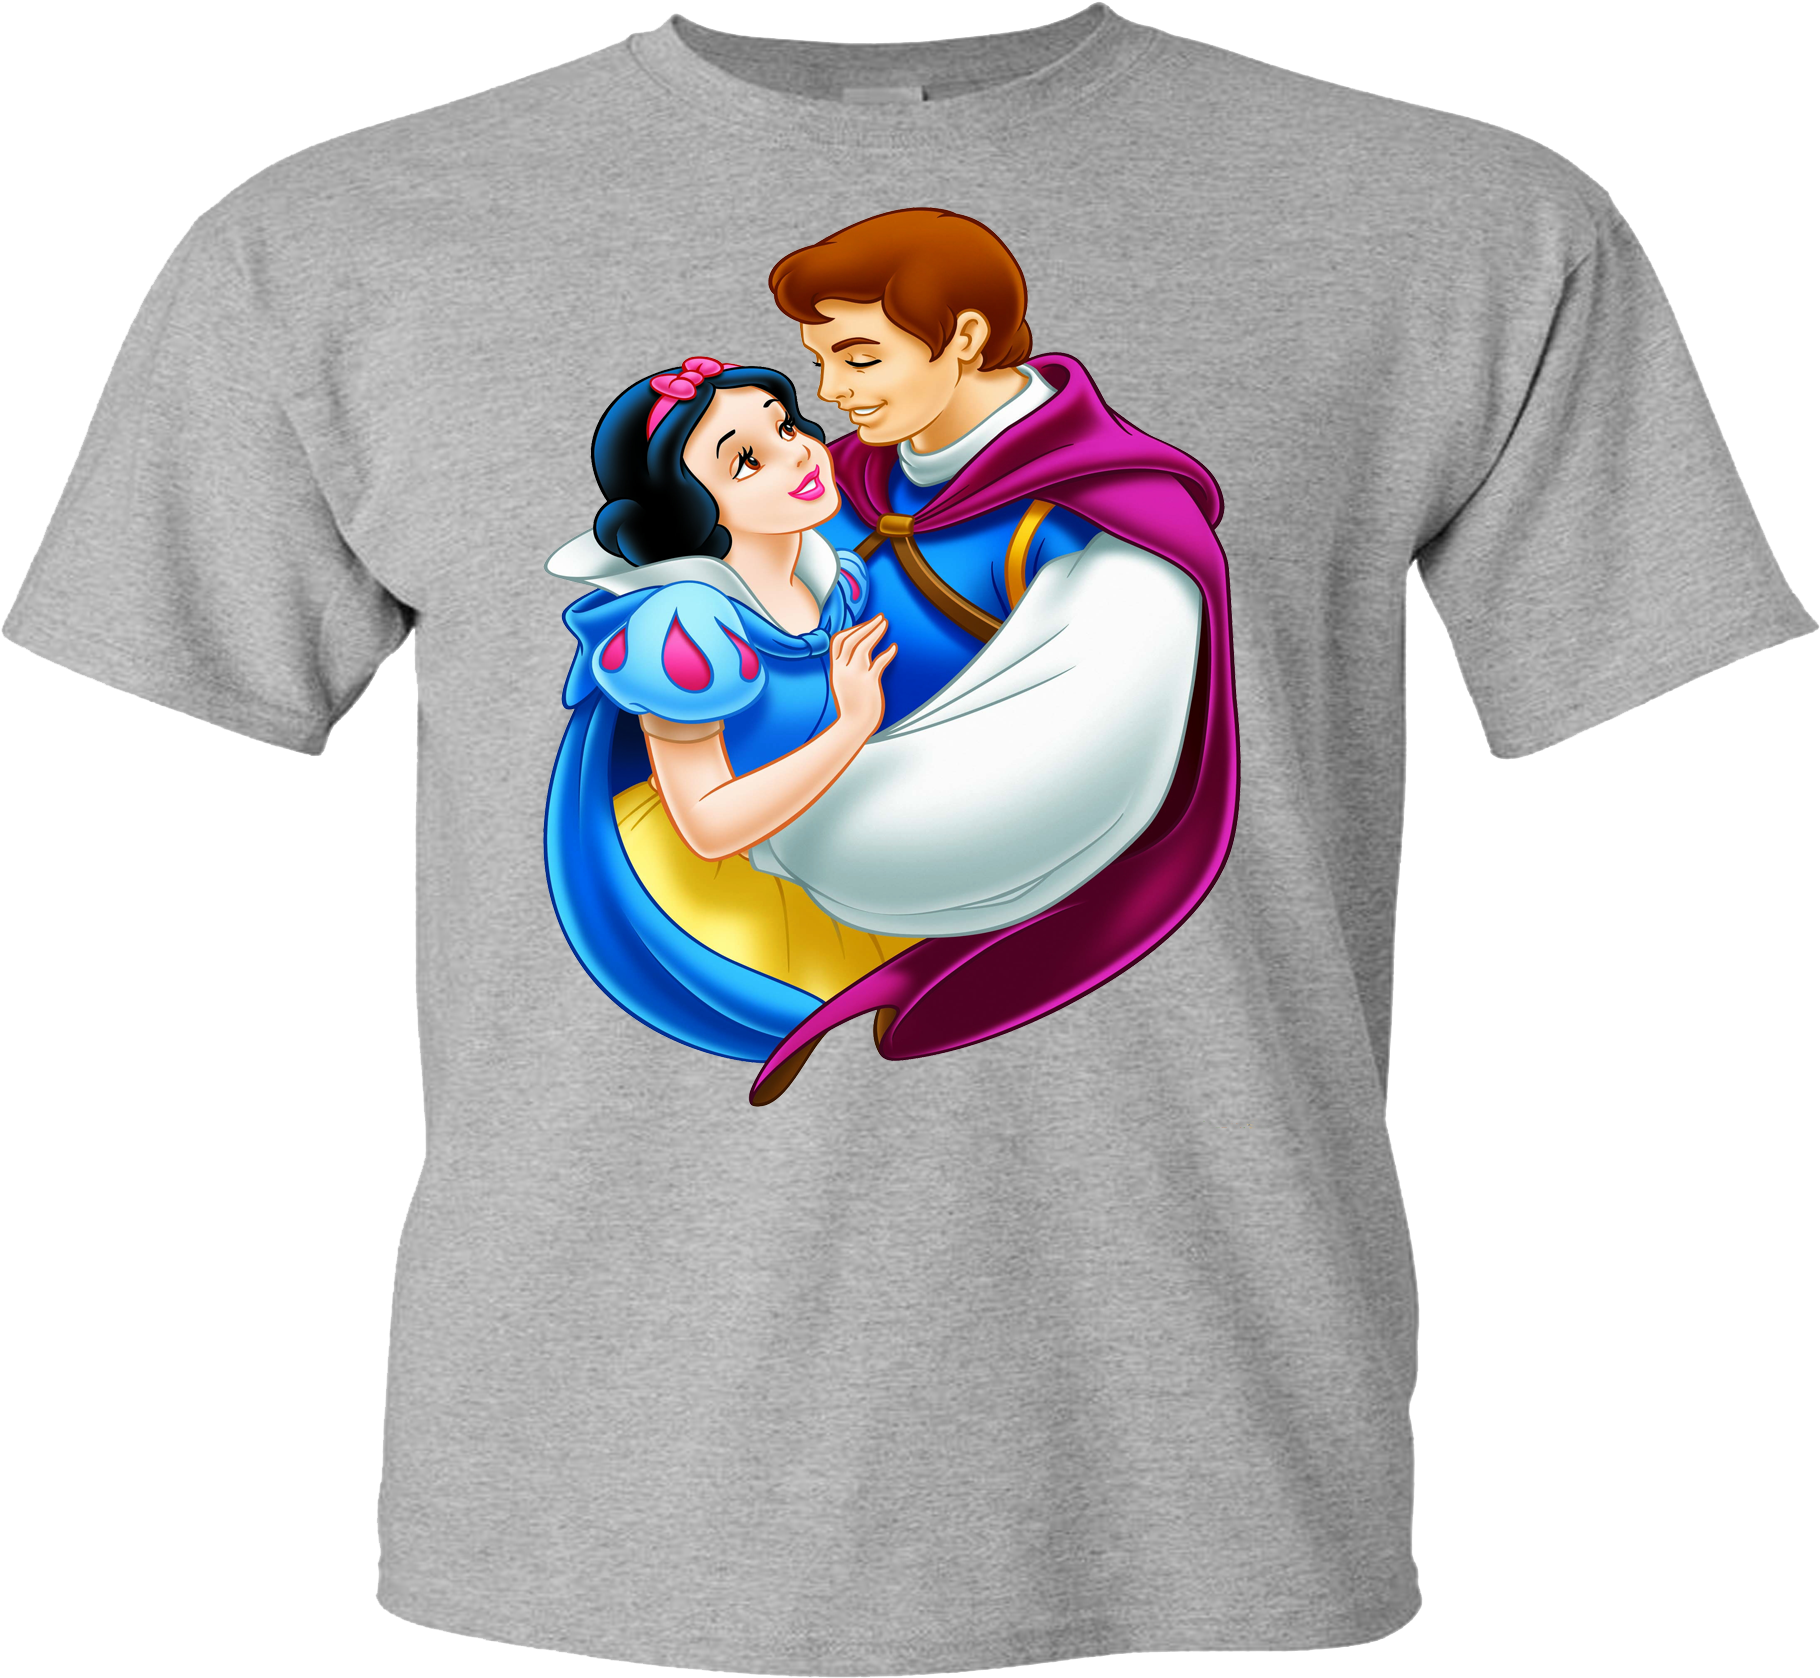 Snow White And The Seven Dwarfs T Shirt Cotton High - Lifting Shirts (1999x1985)